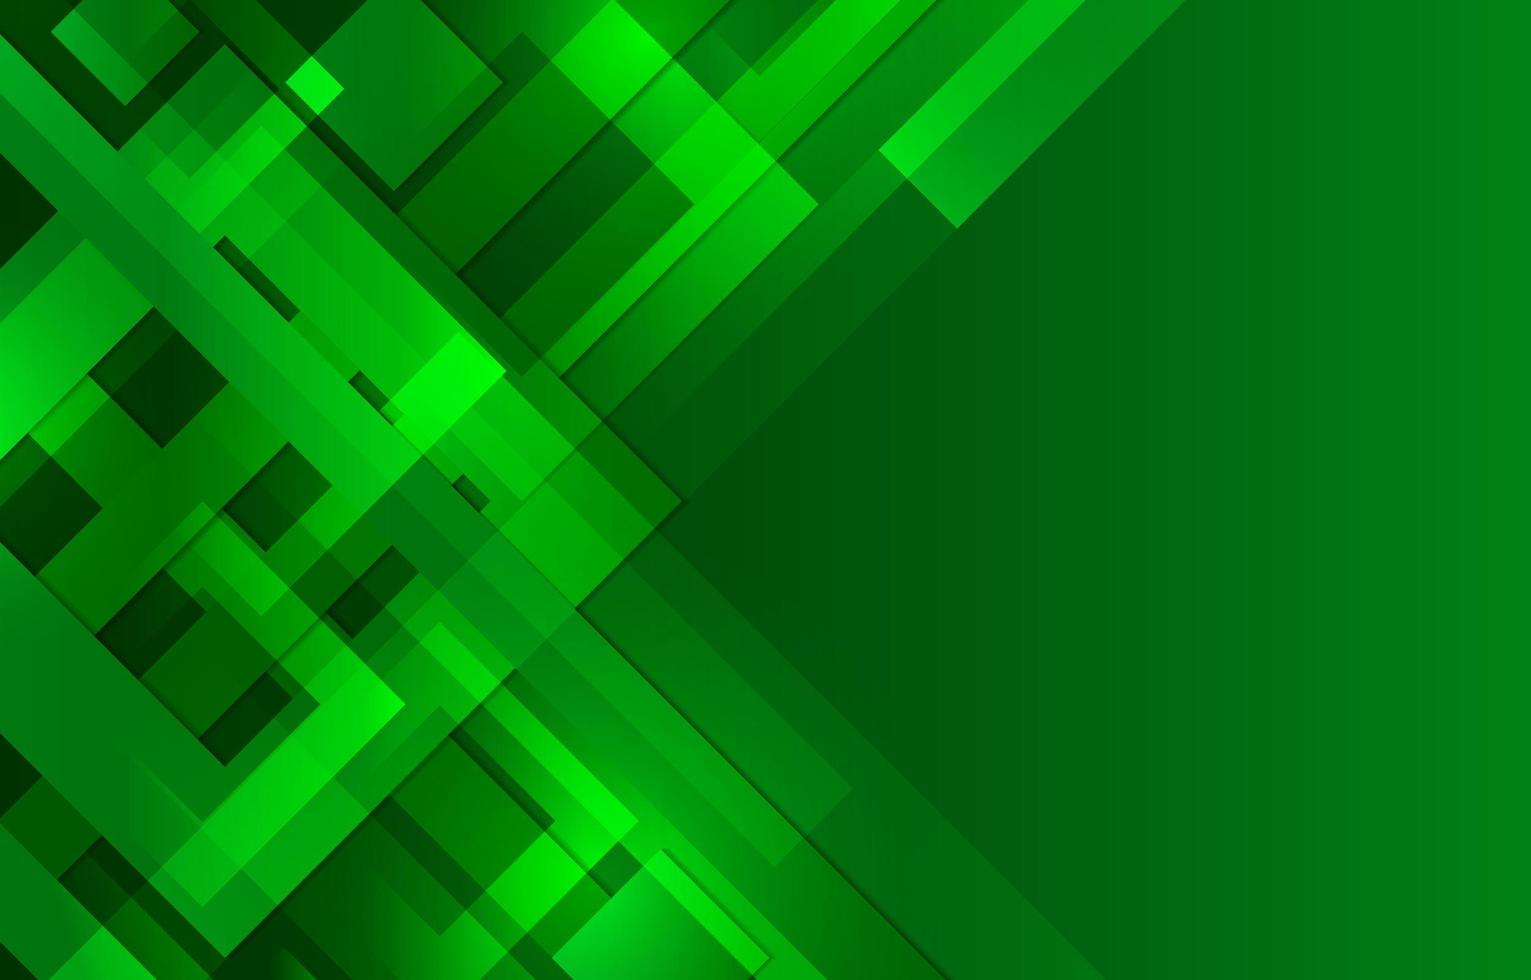 abstrakter grüner Hintergrund vektor